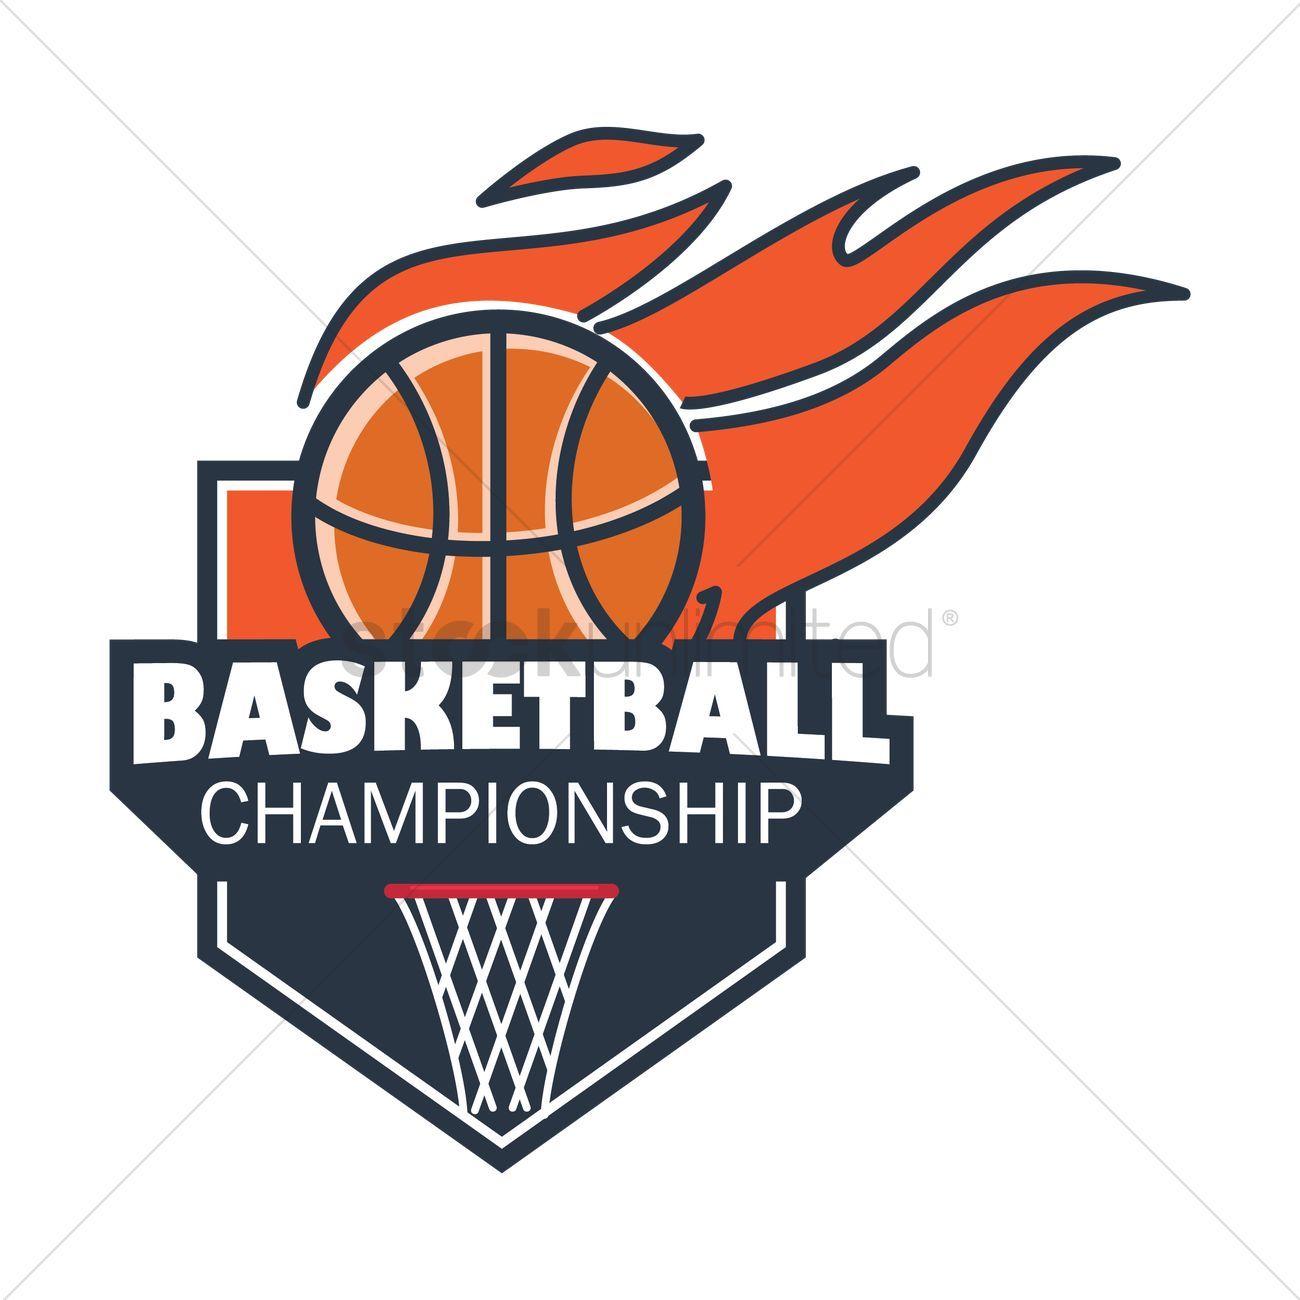 Championship Logo - Basketball championship logo element Vector Image - 1992038 ...